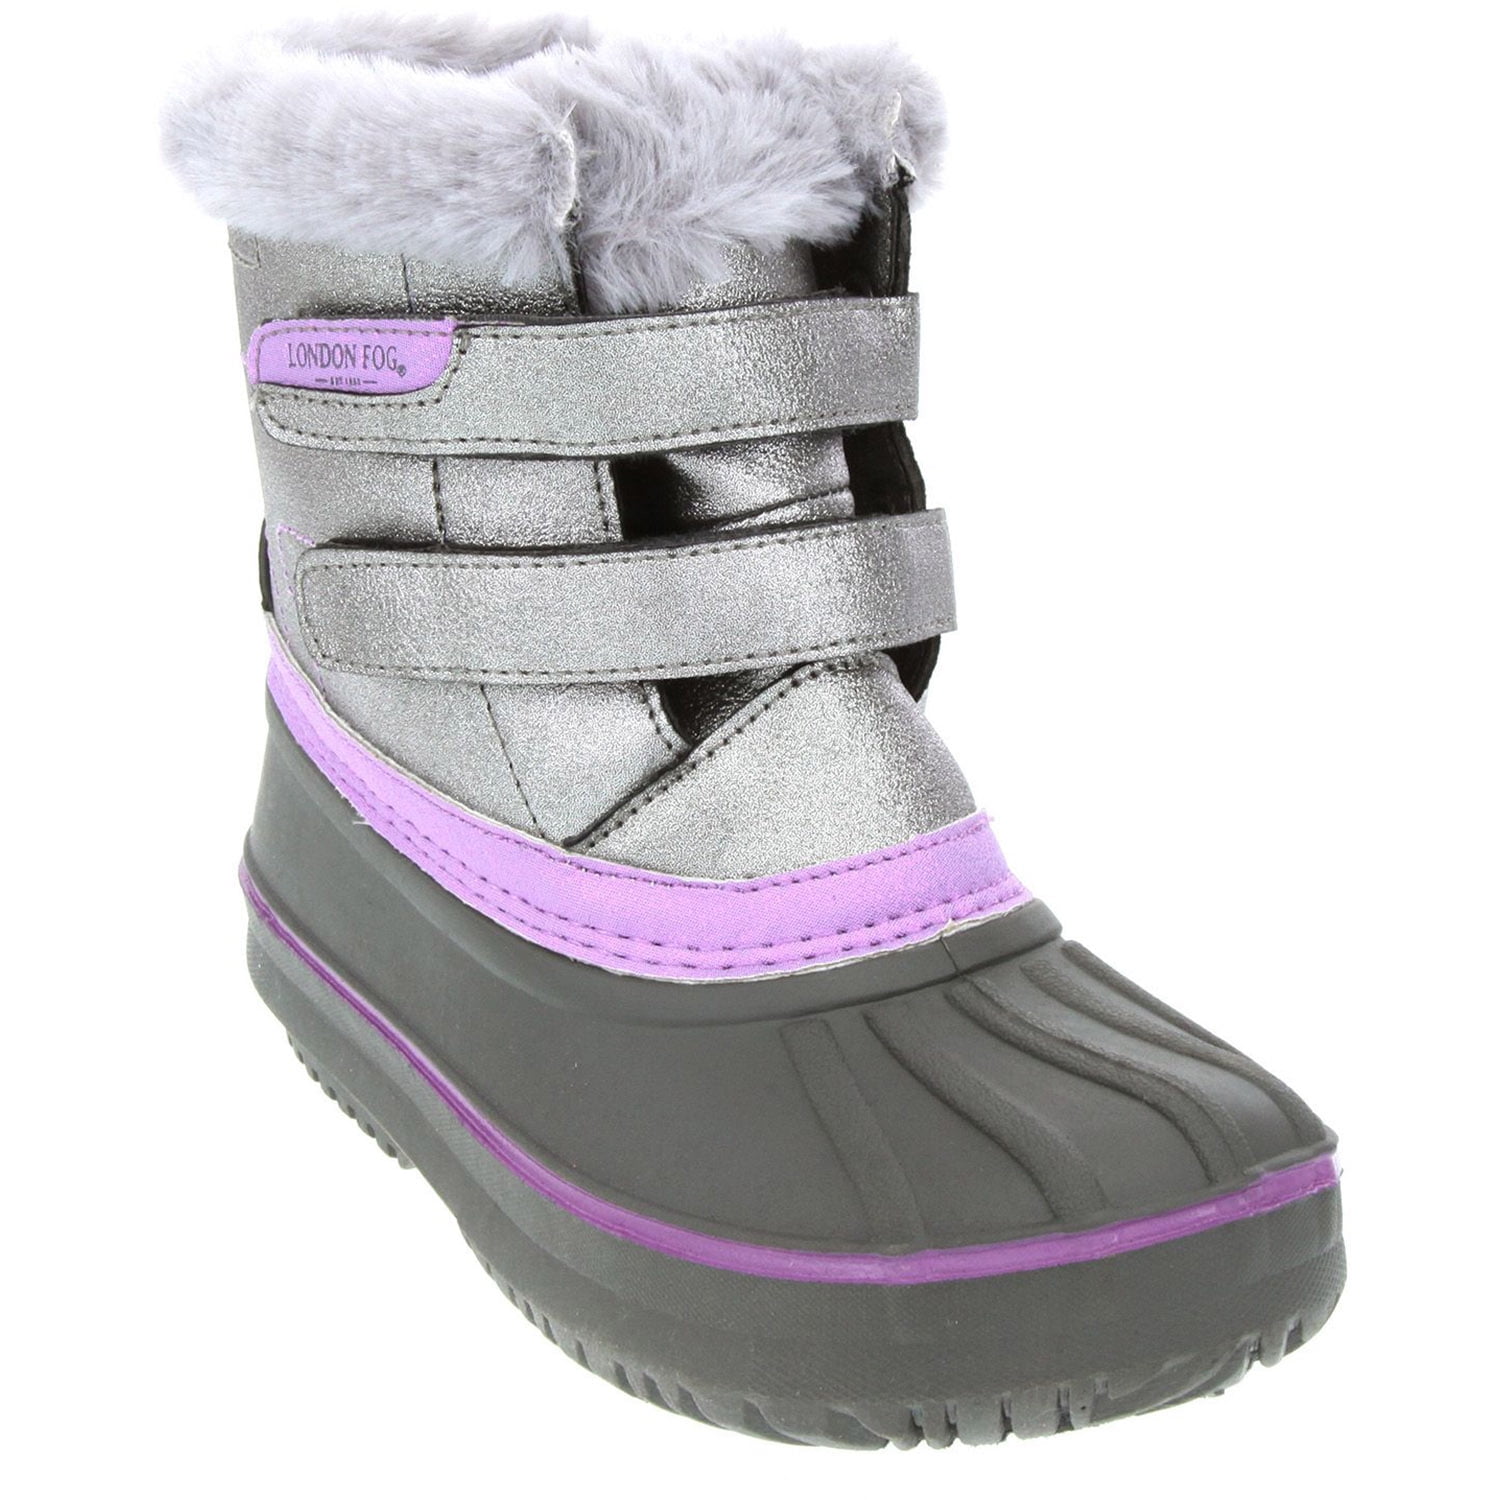 london fog girls snow boots